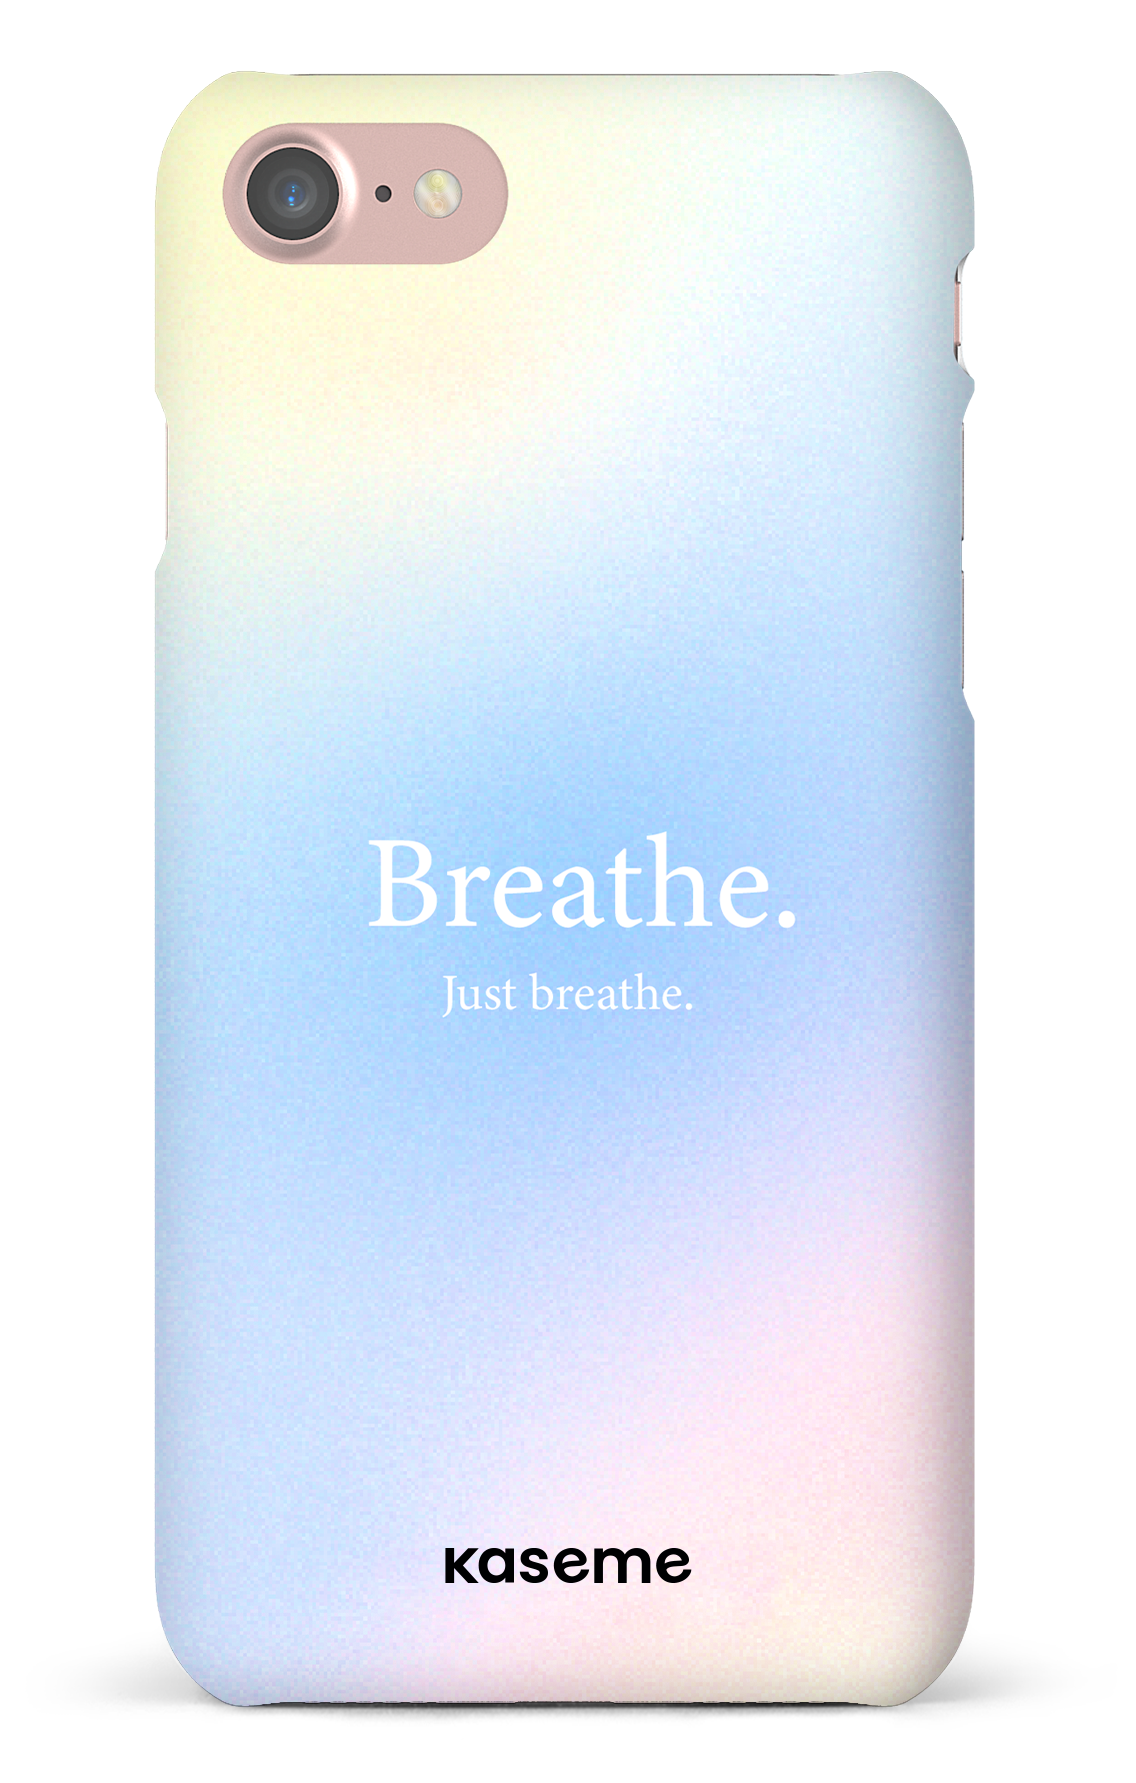 Just breathe blue - iPhone 7